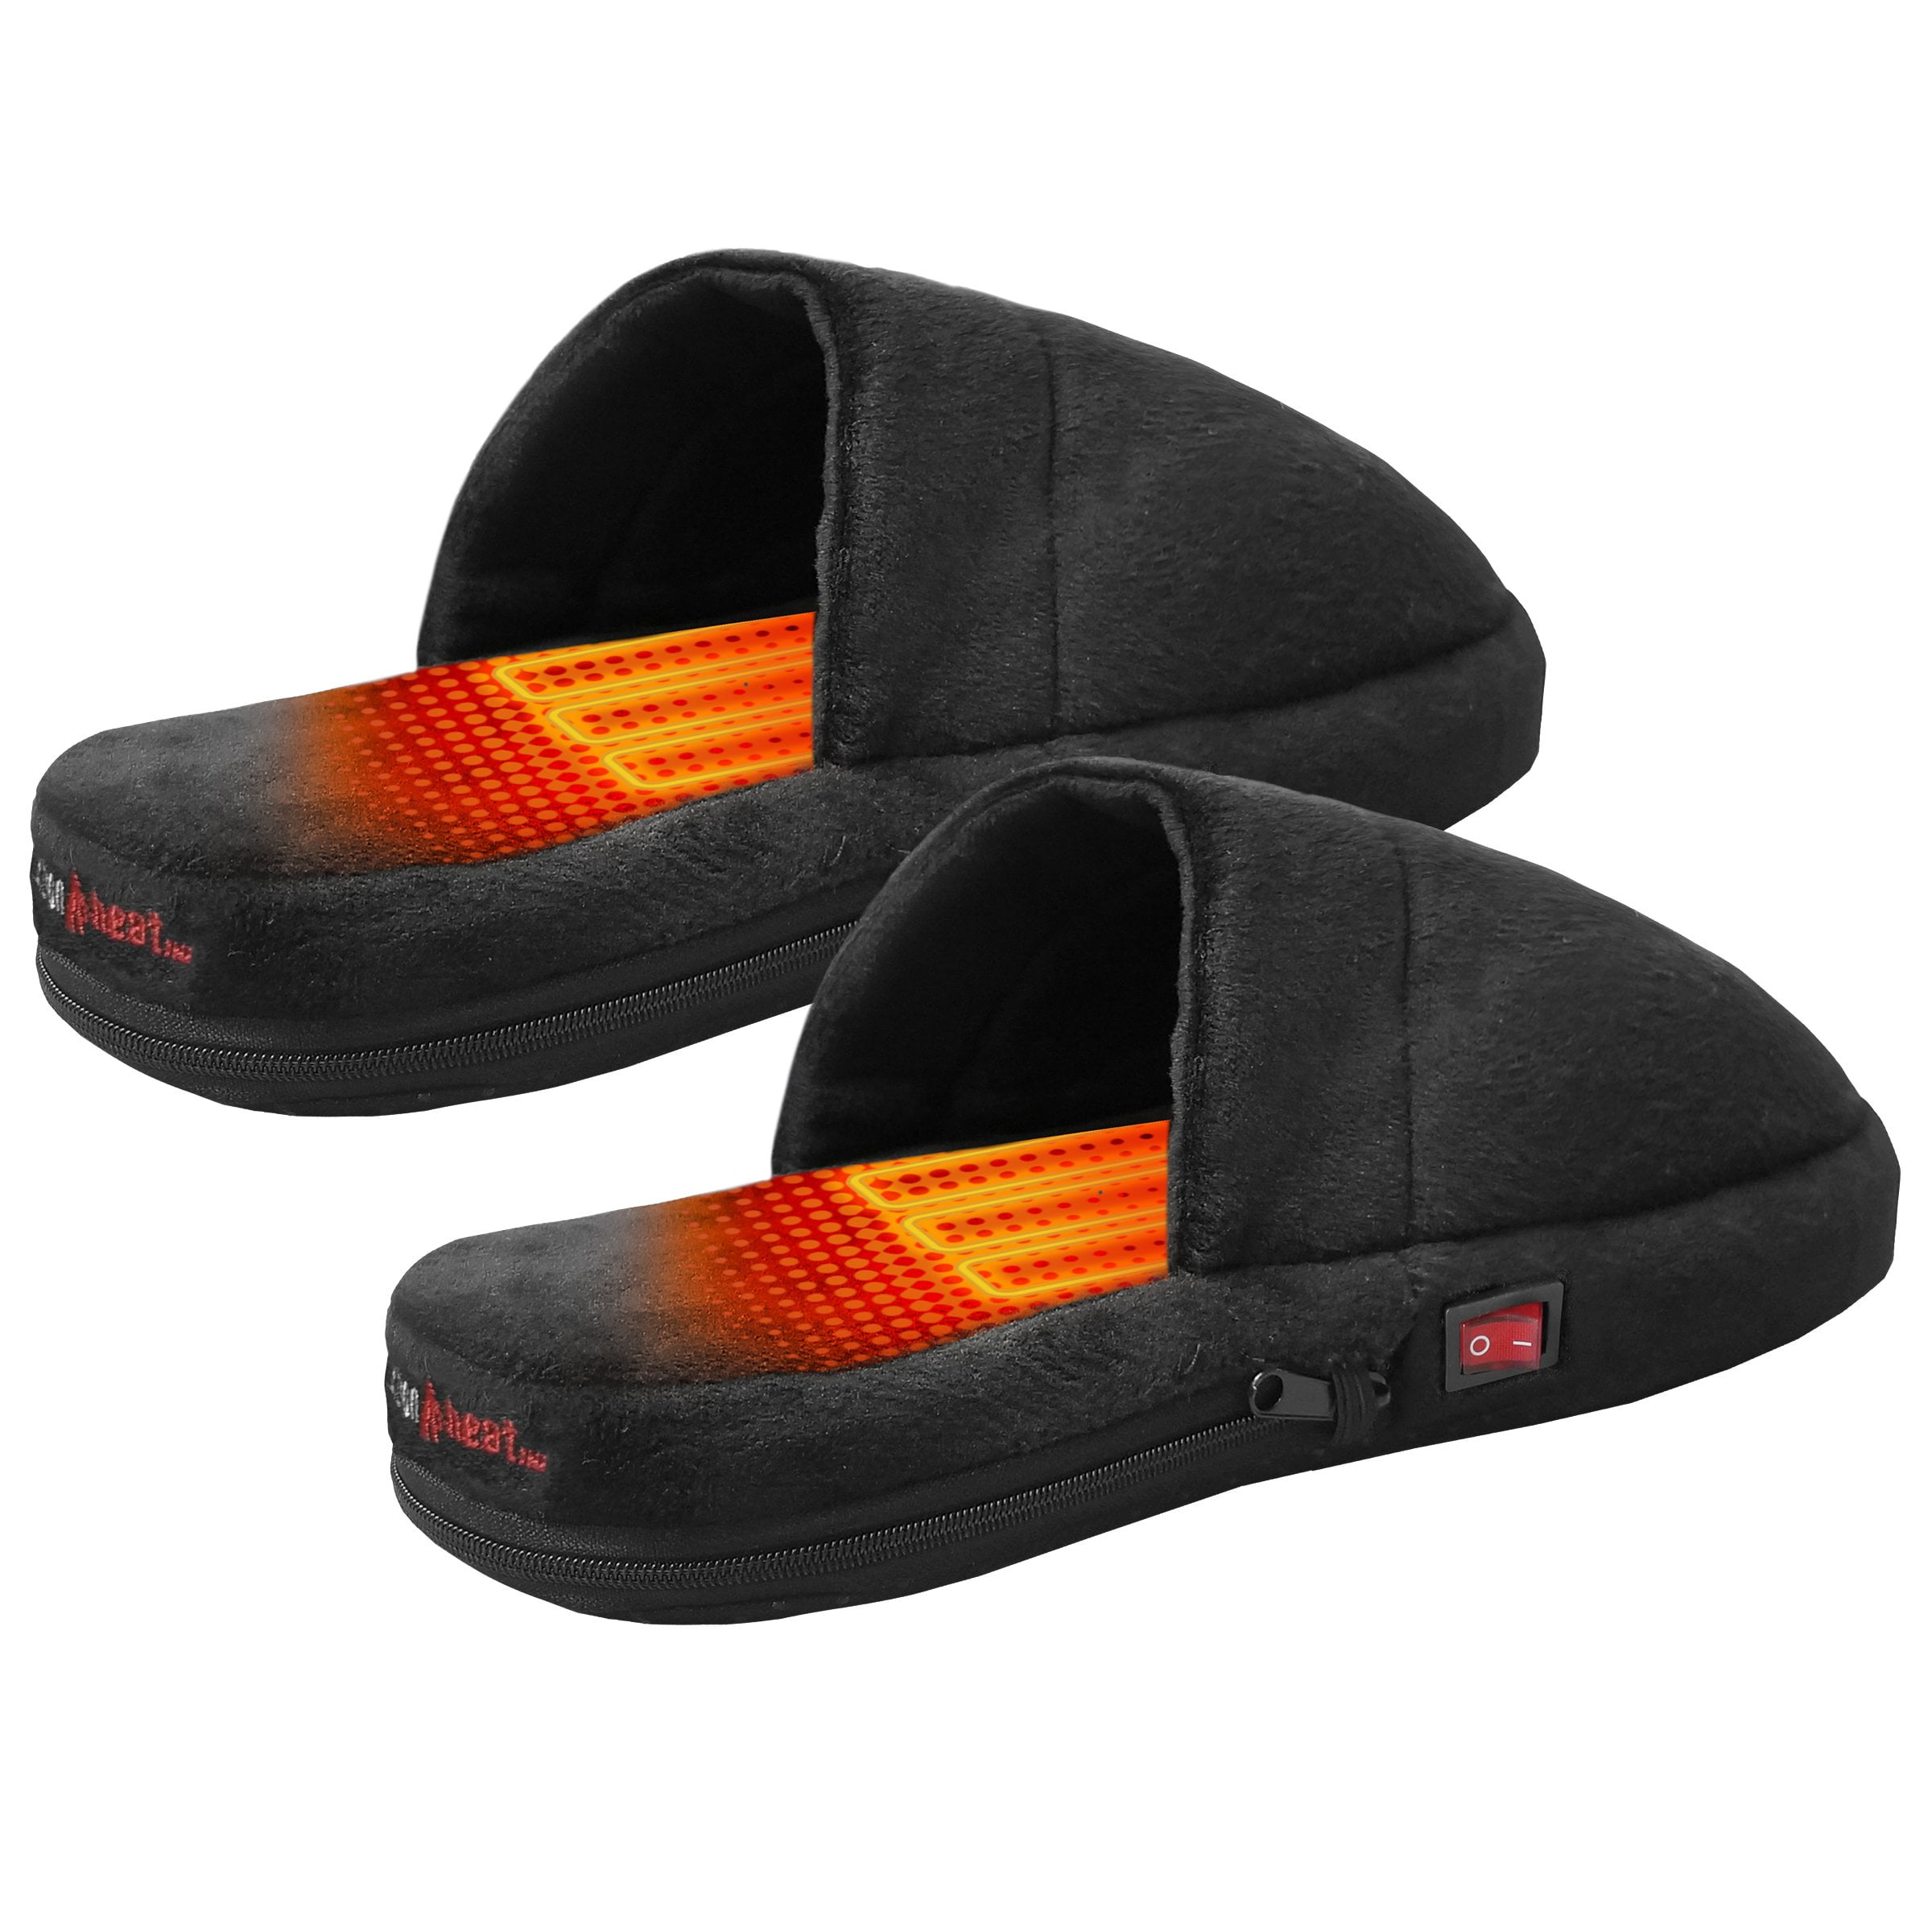 walmart heated slippers